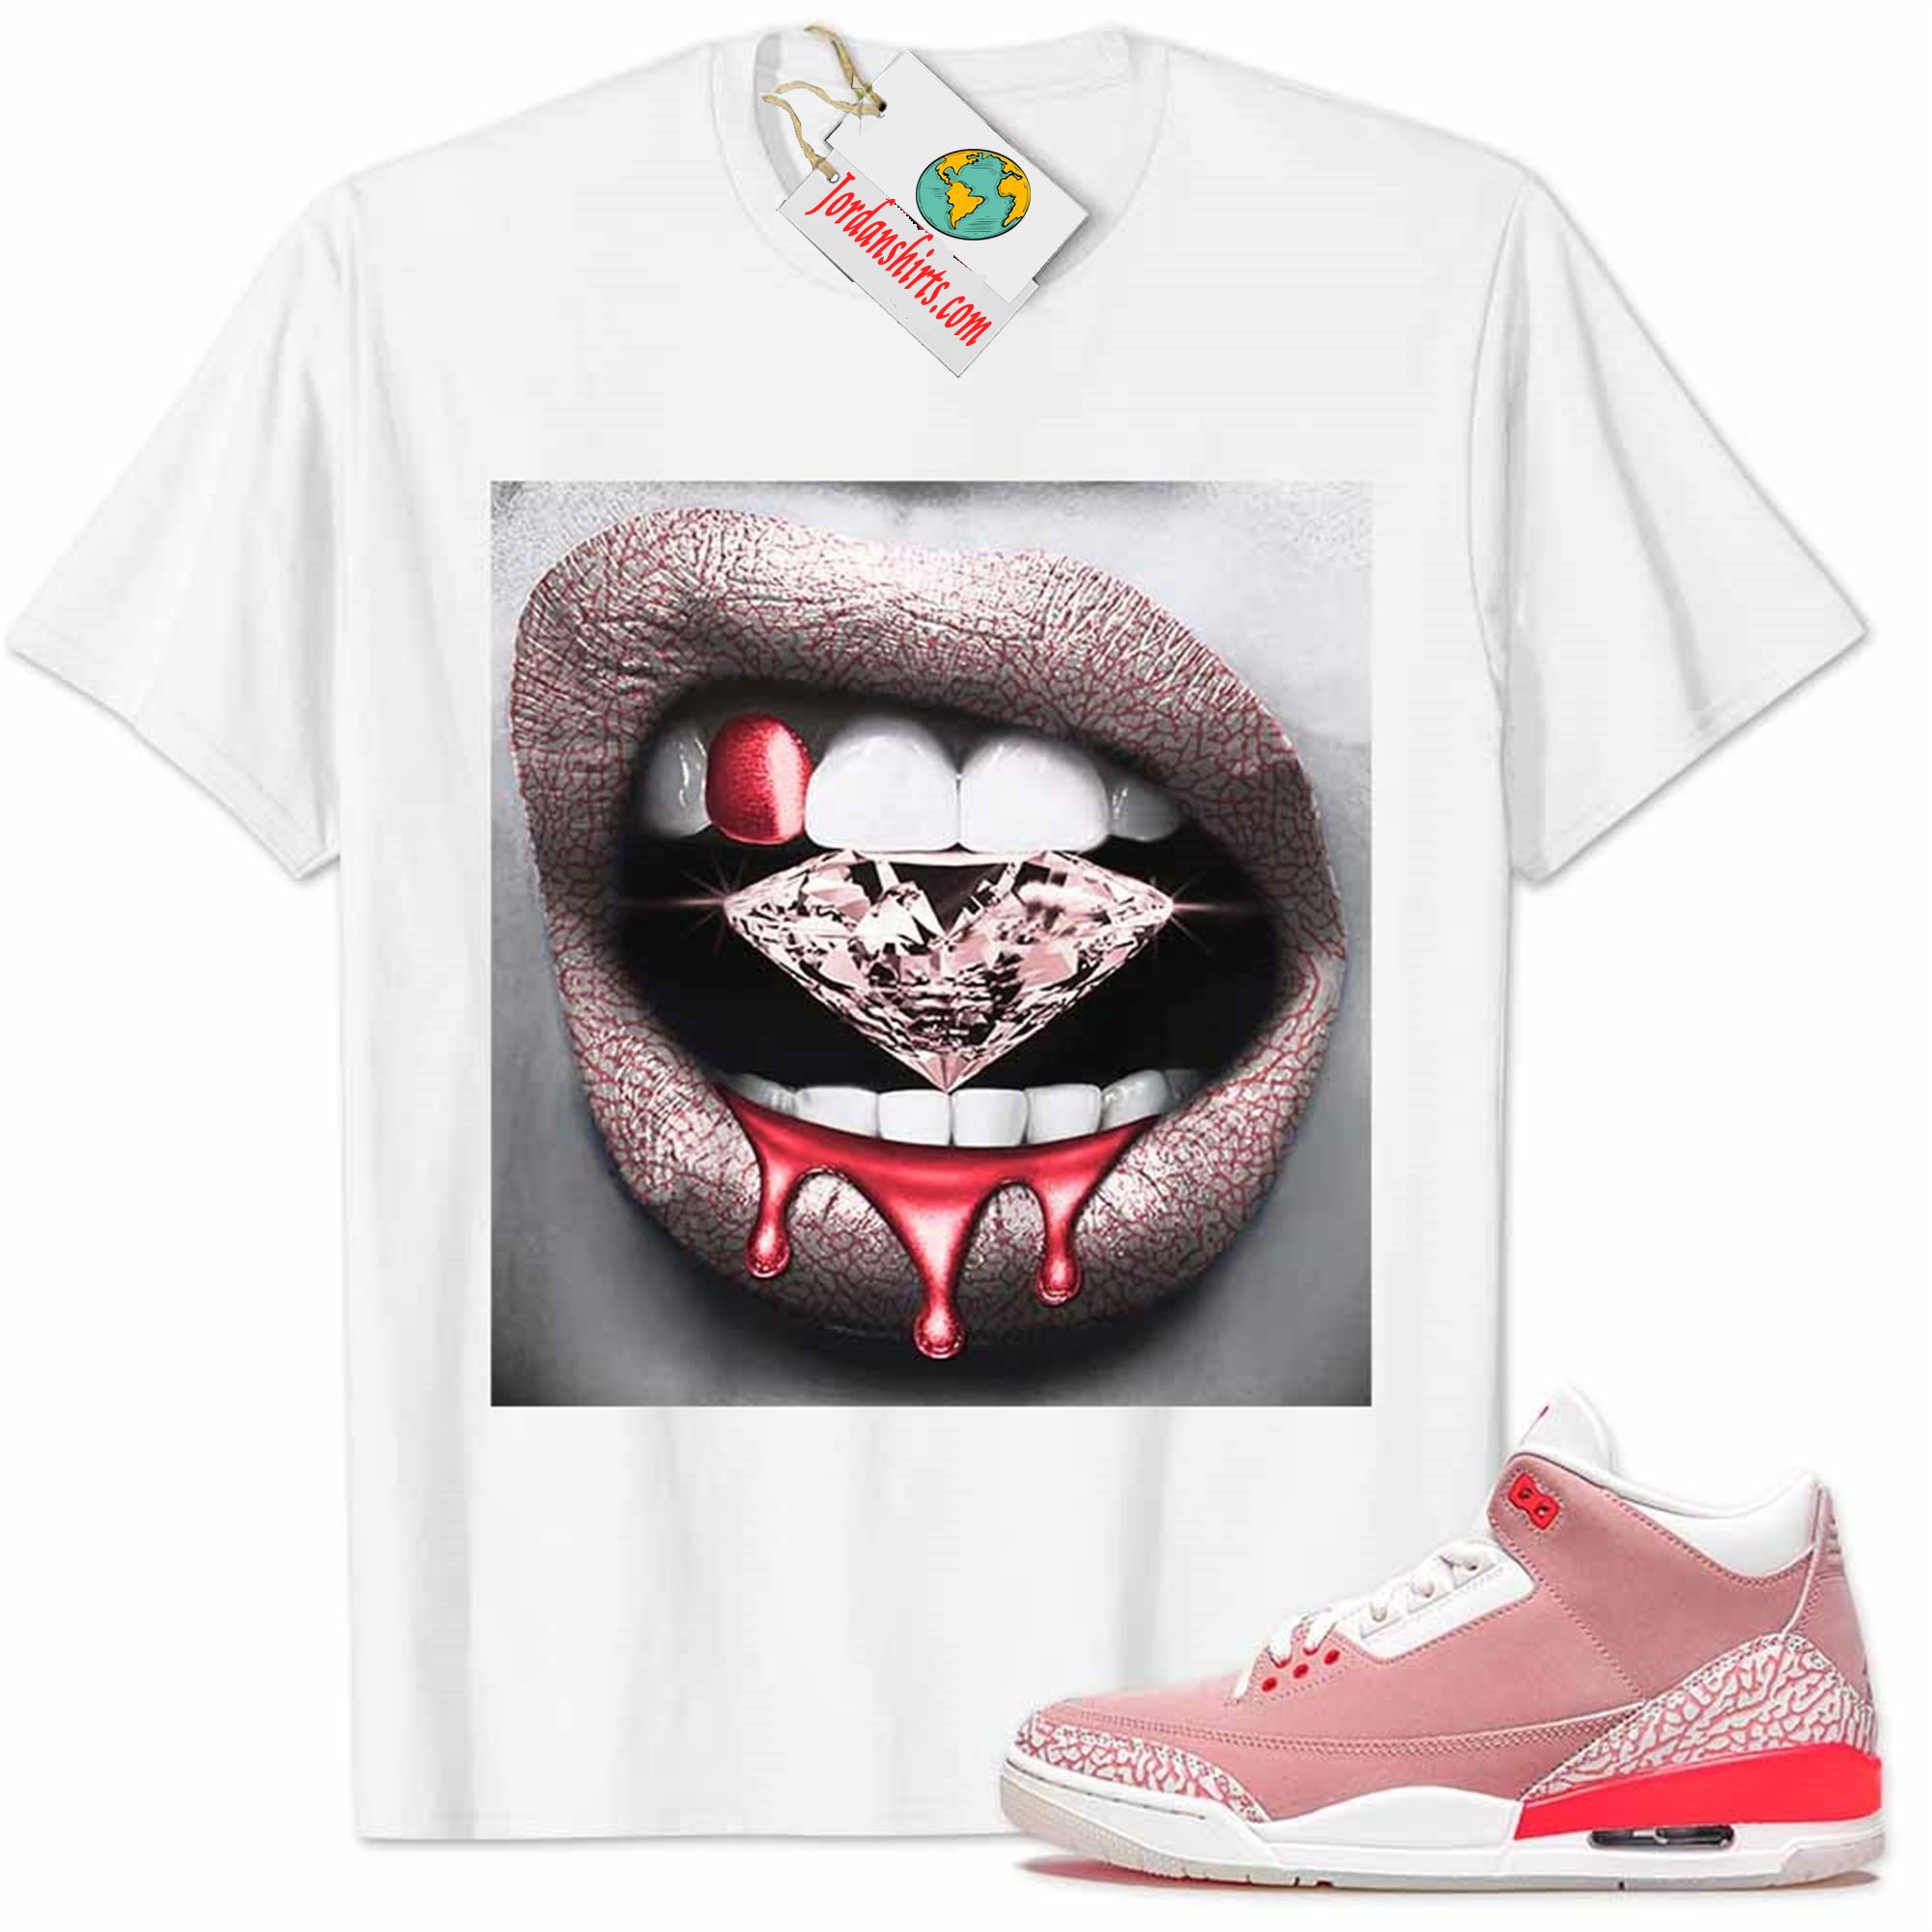 Jordan 3 Shirt, Jordan 3 Rust Pink Shirt Sexy Lip Bite Diamond Dripping White Size Up To 5xl